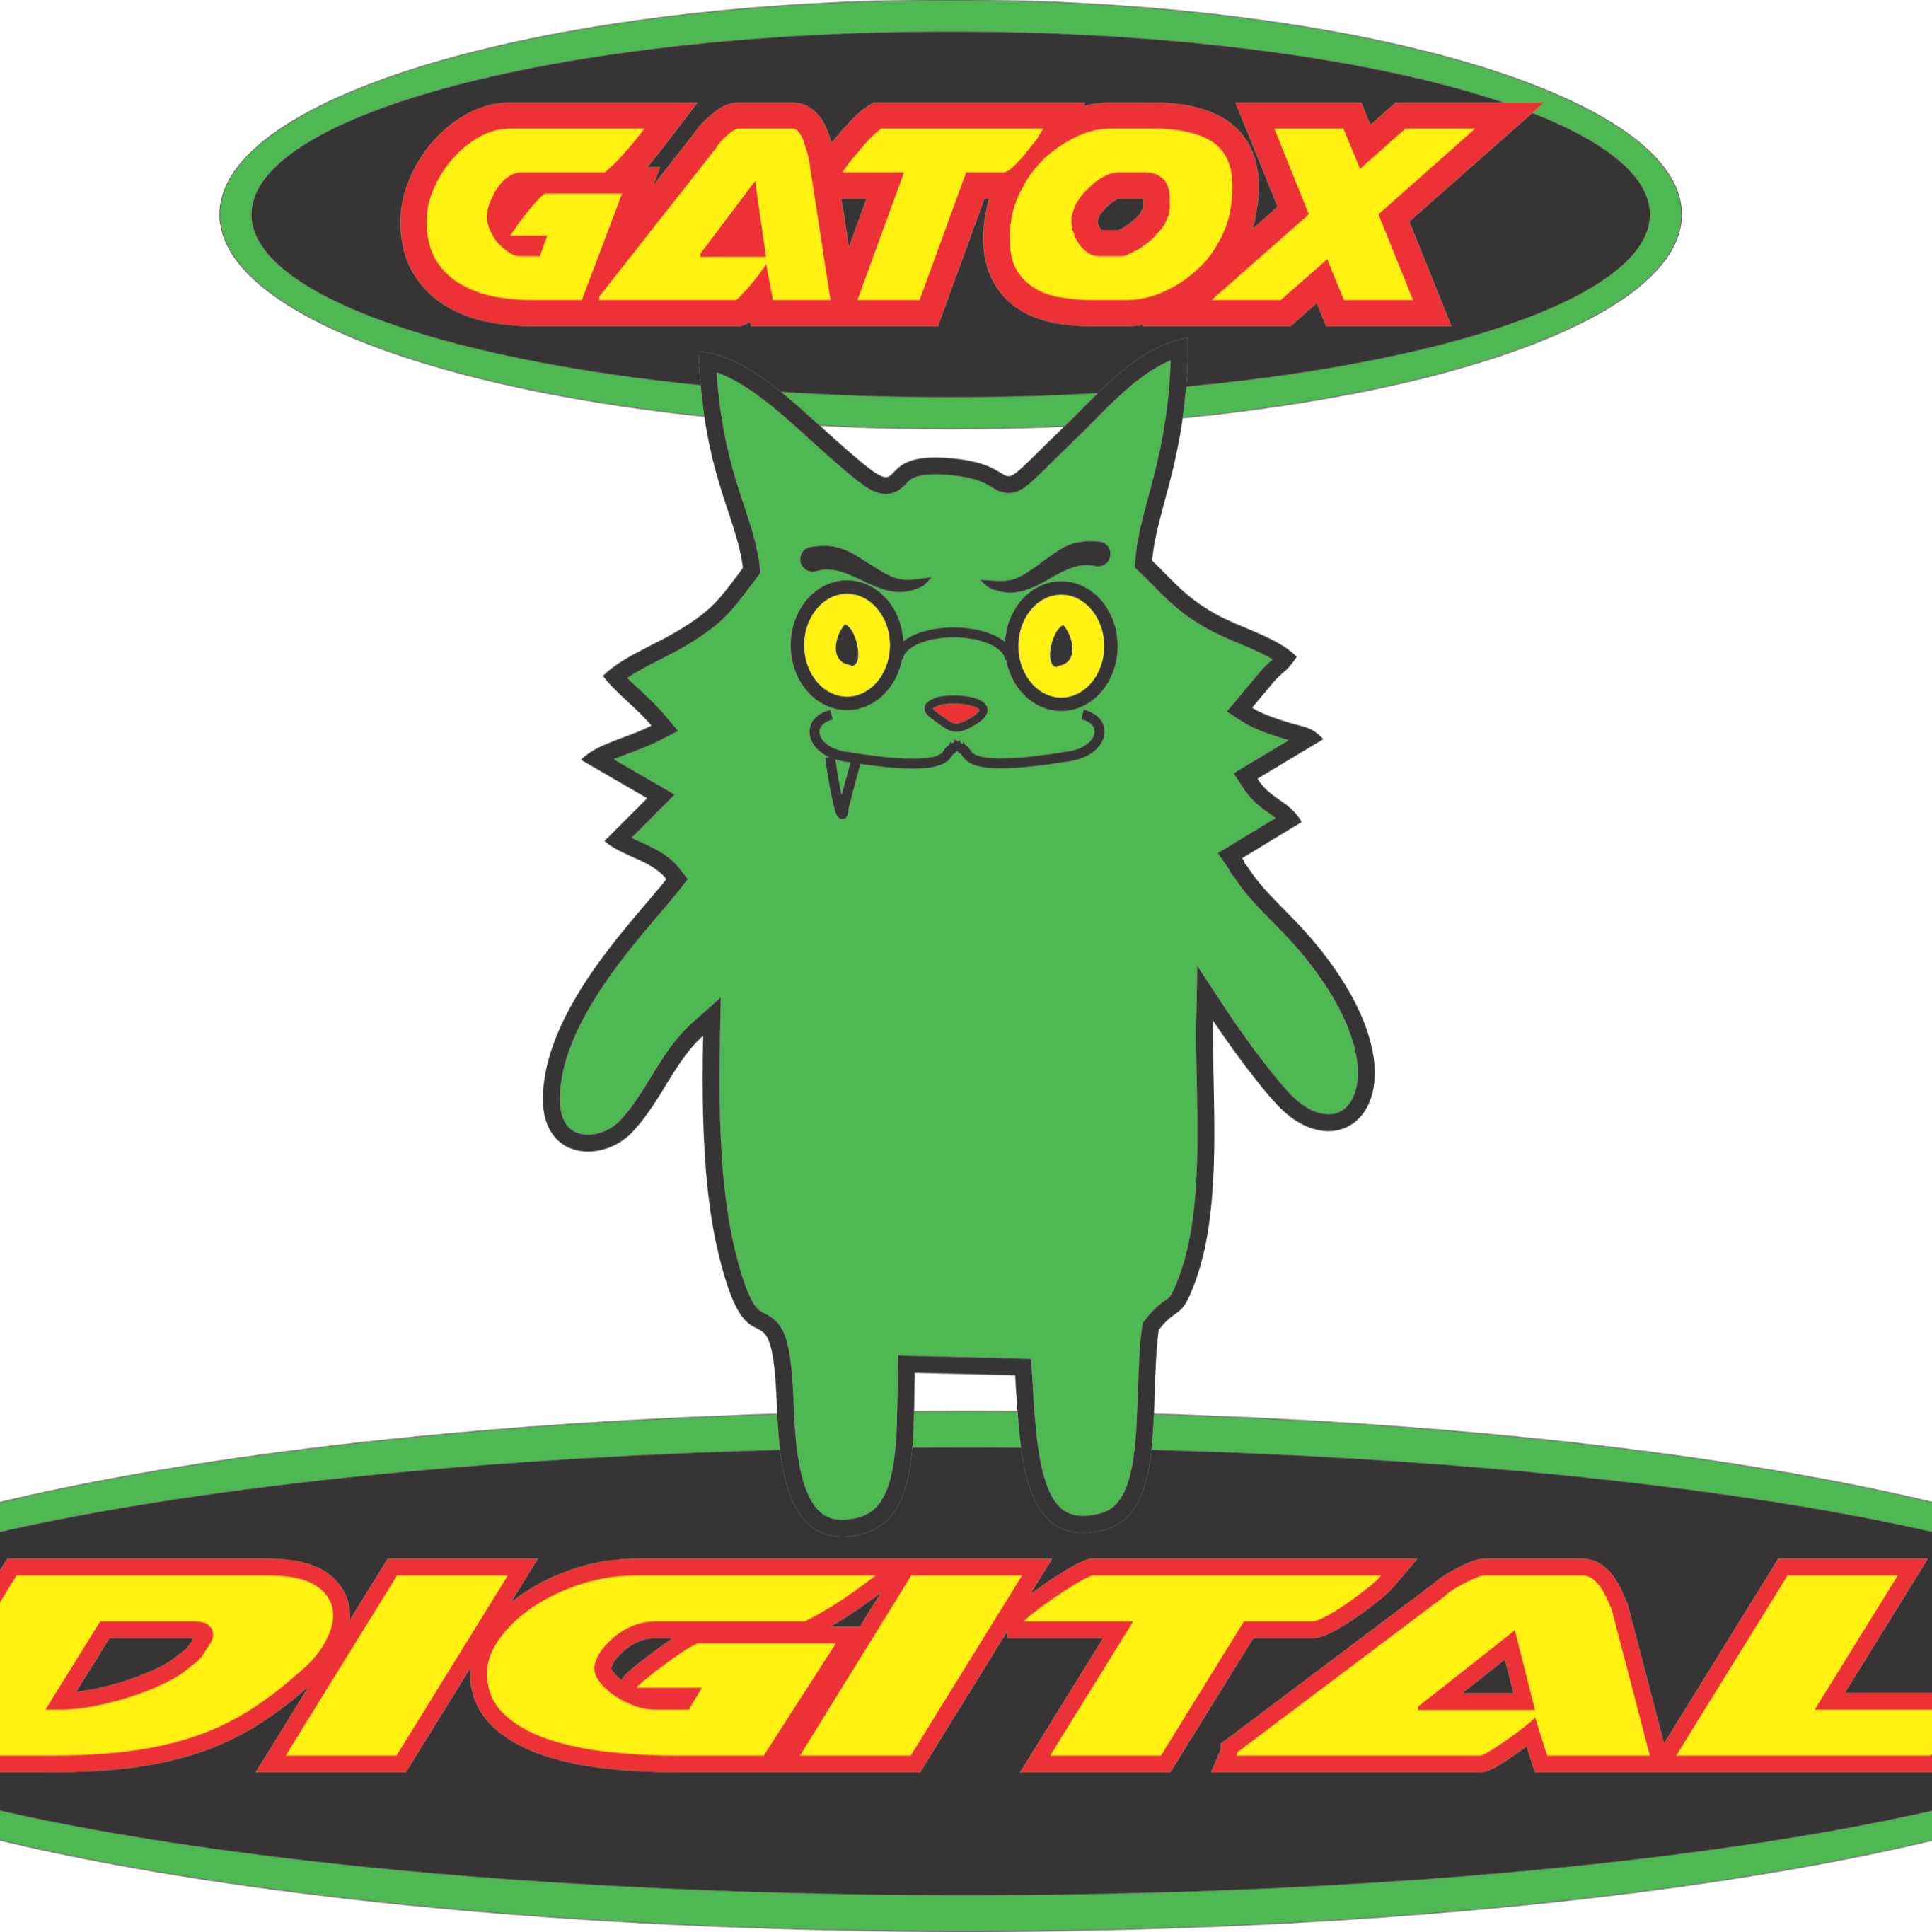 GatoX DigitaL